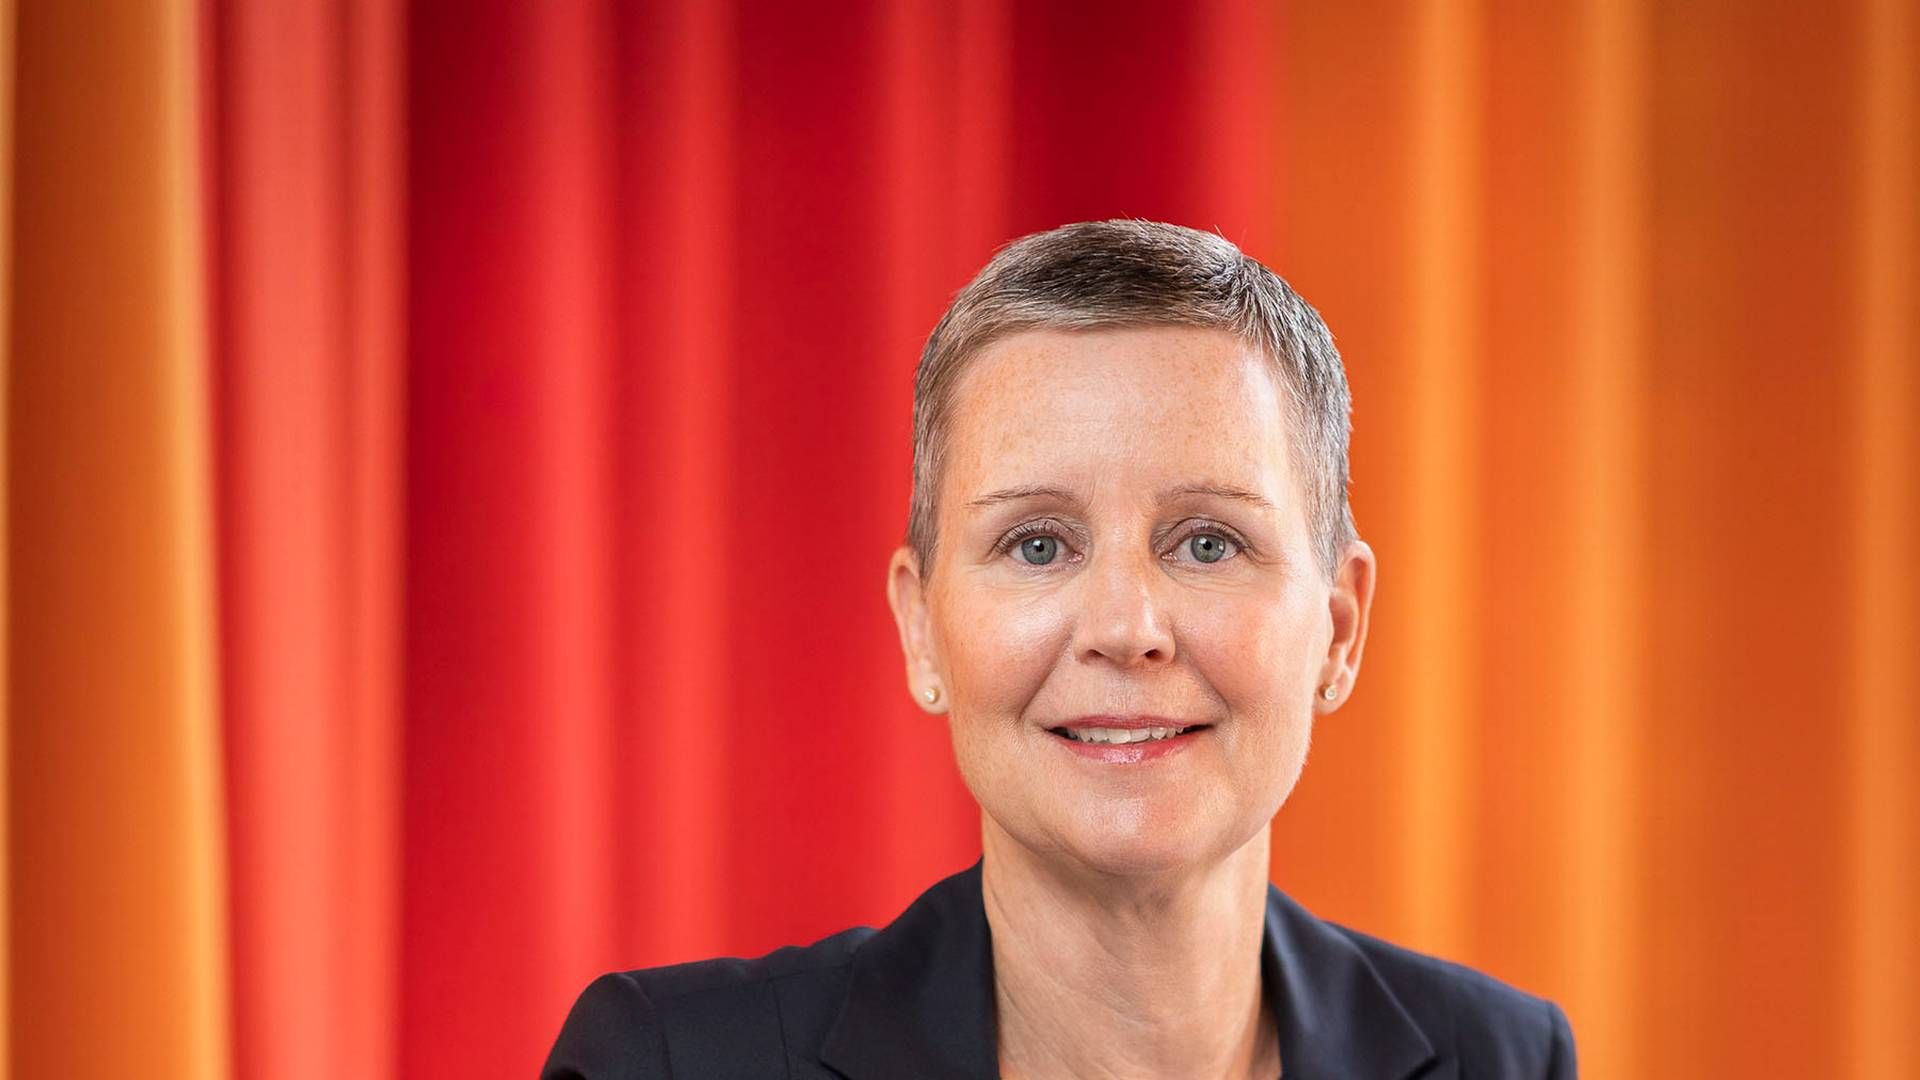 Kajsa Möller has been appointed Acting Director General of the Swedish Pensions Agency. | Photo: Pensionsmyndigheten/pr